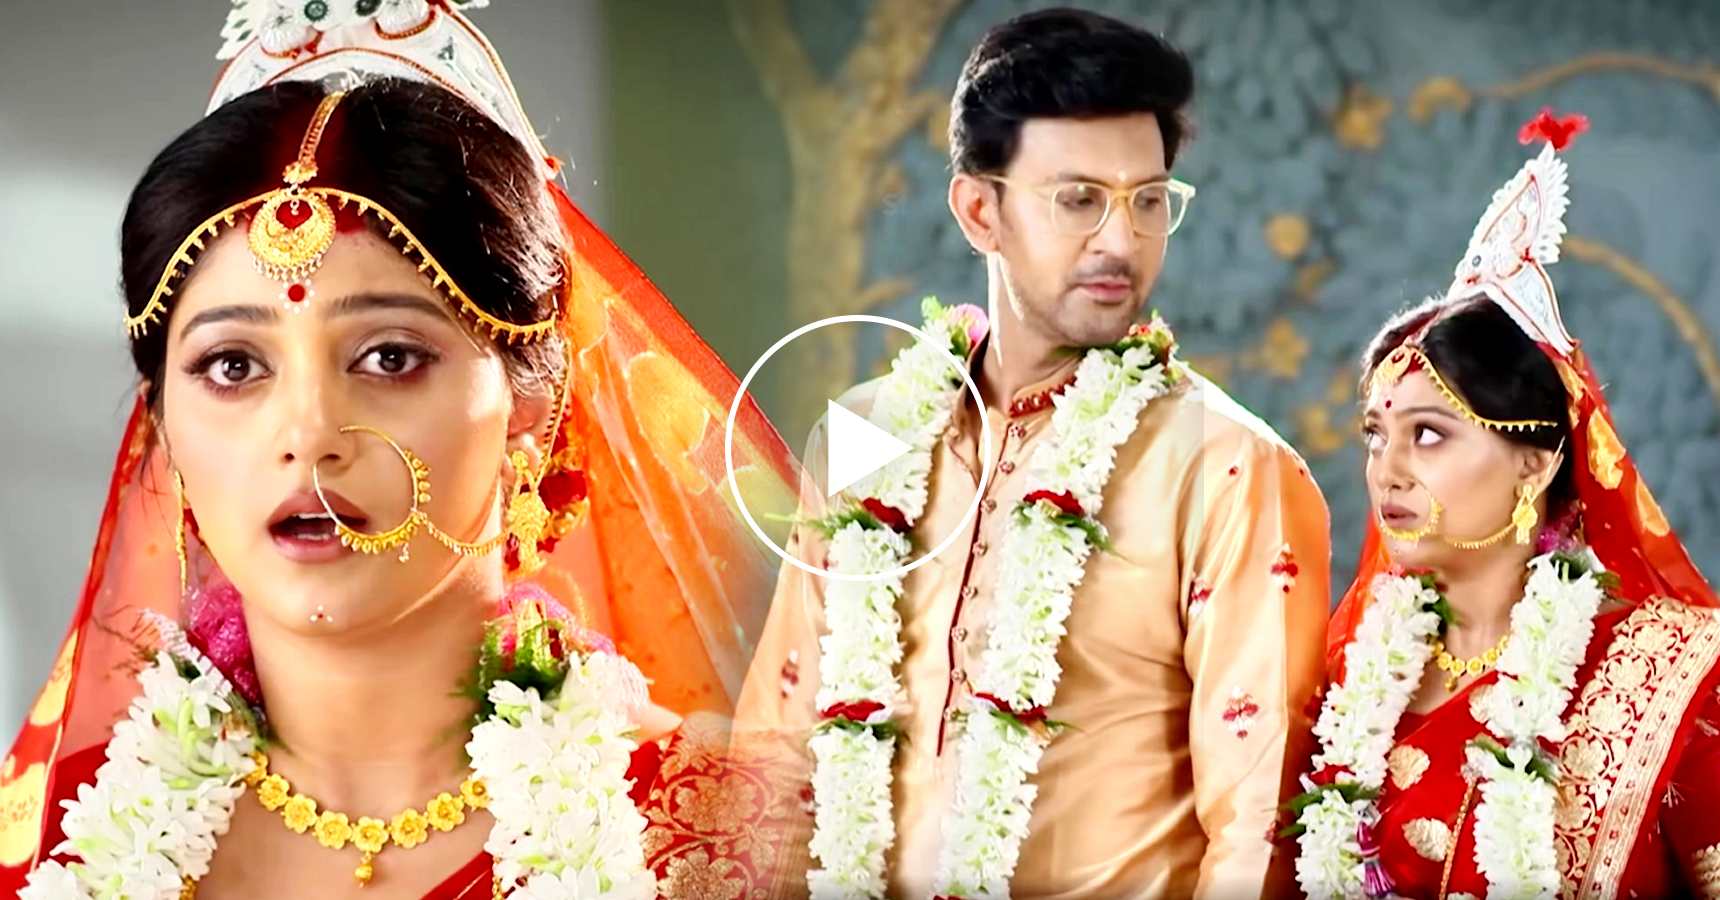 Tunte serial Rangan Tunte marriage new promo on air